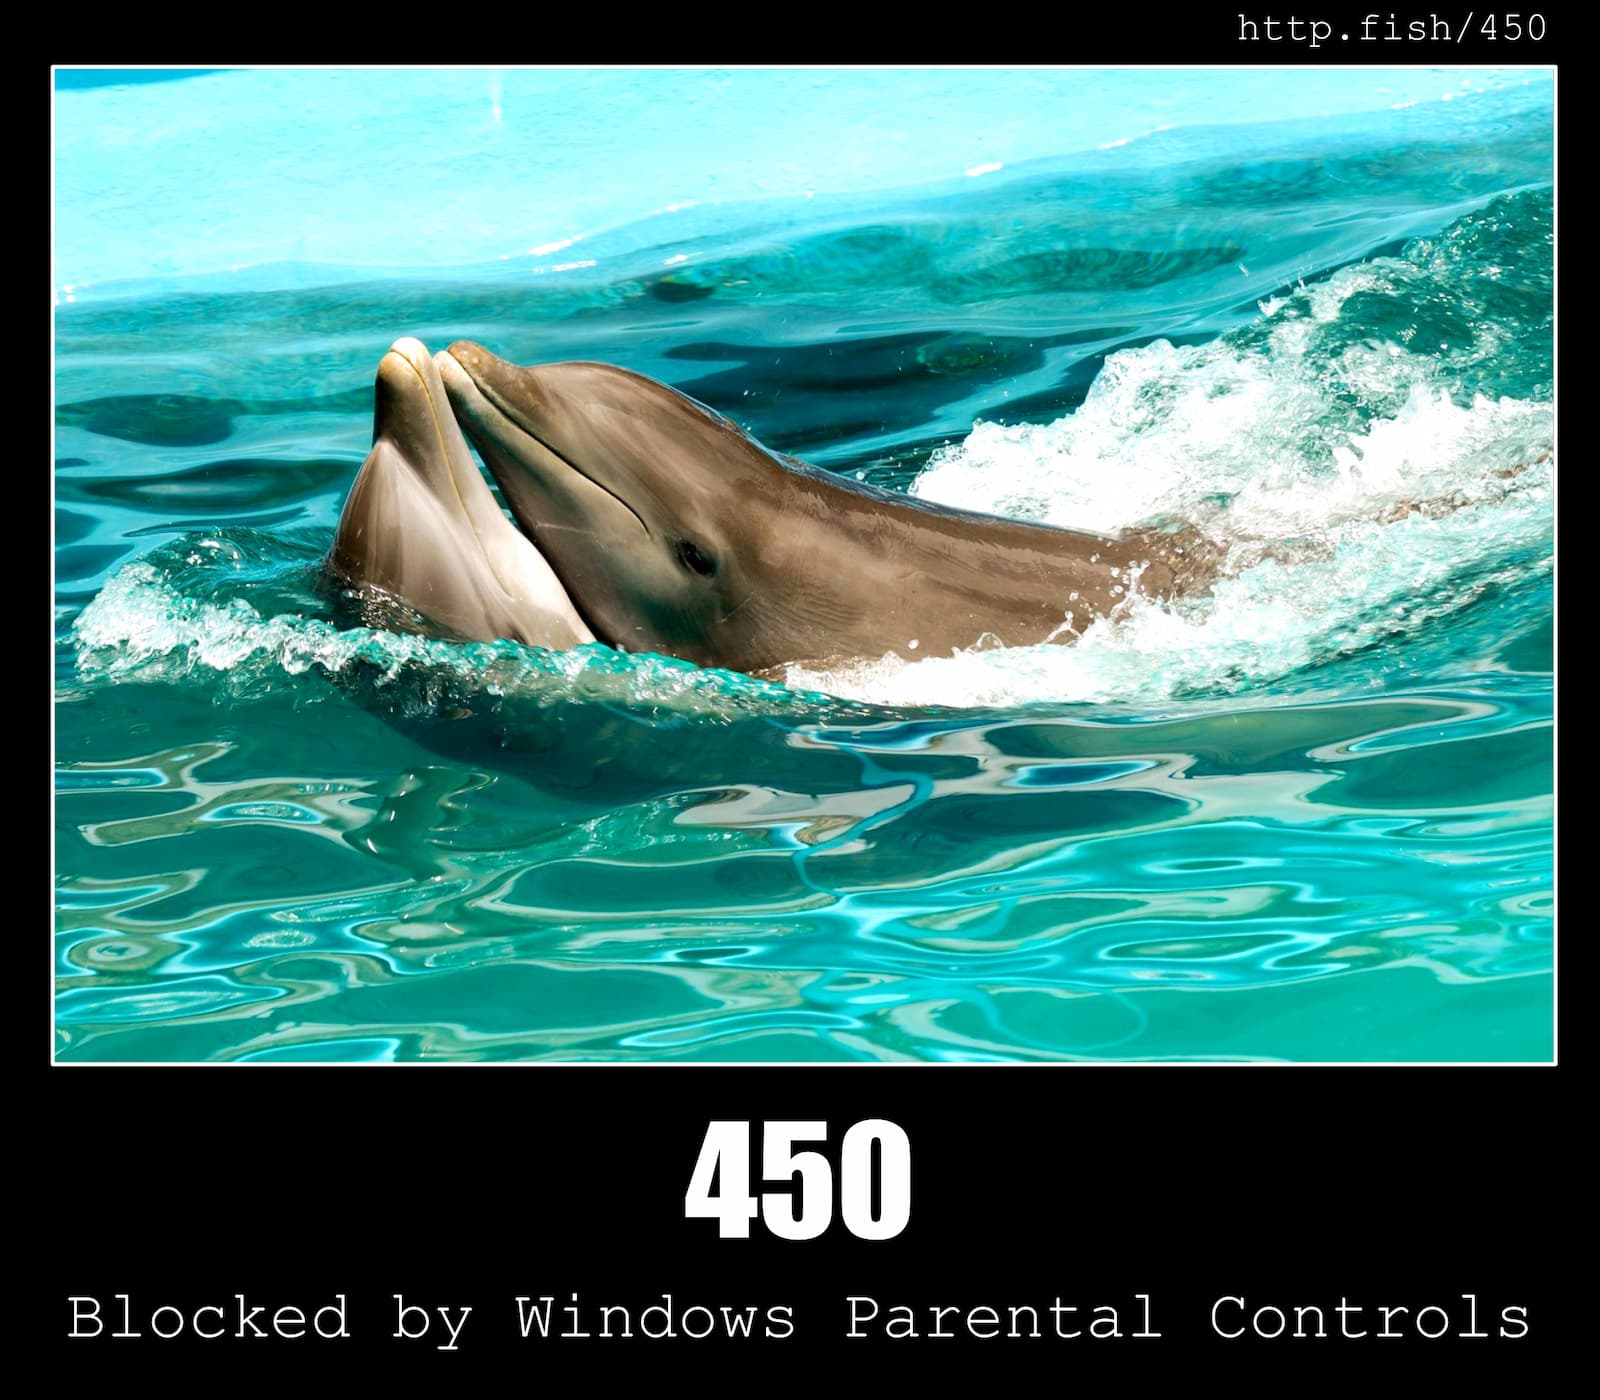 HTTP Status Code 450 Blocked by Windows Parental Controls & Fish